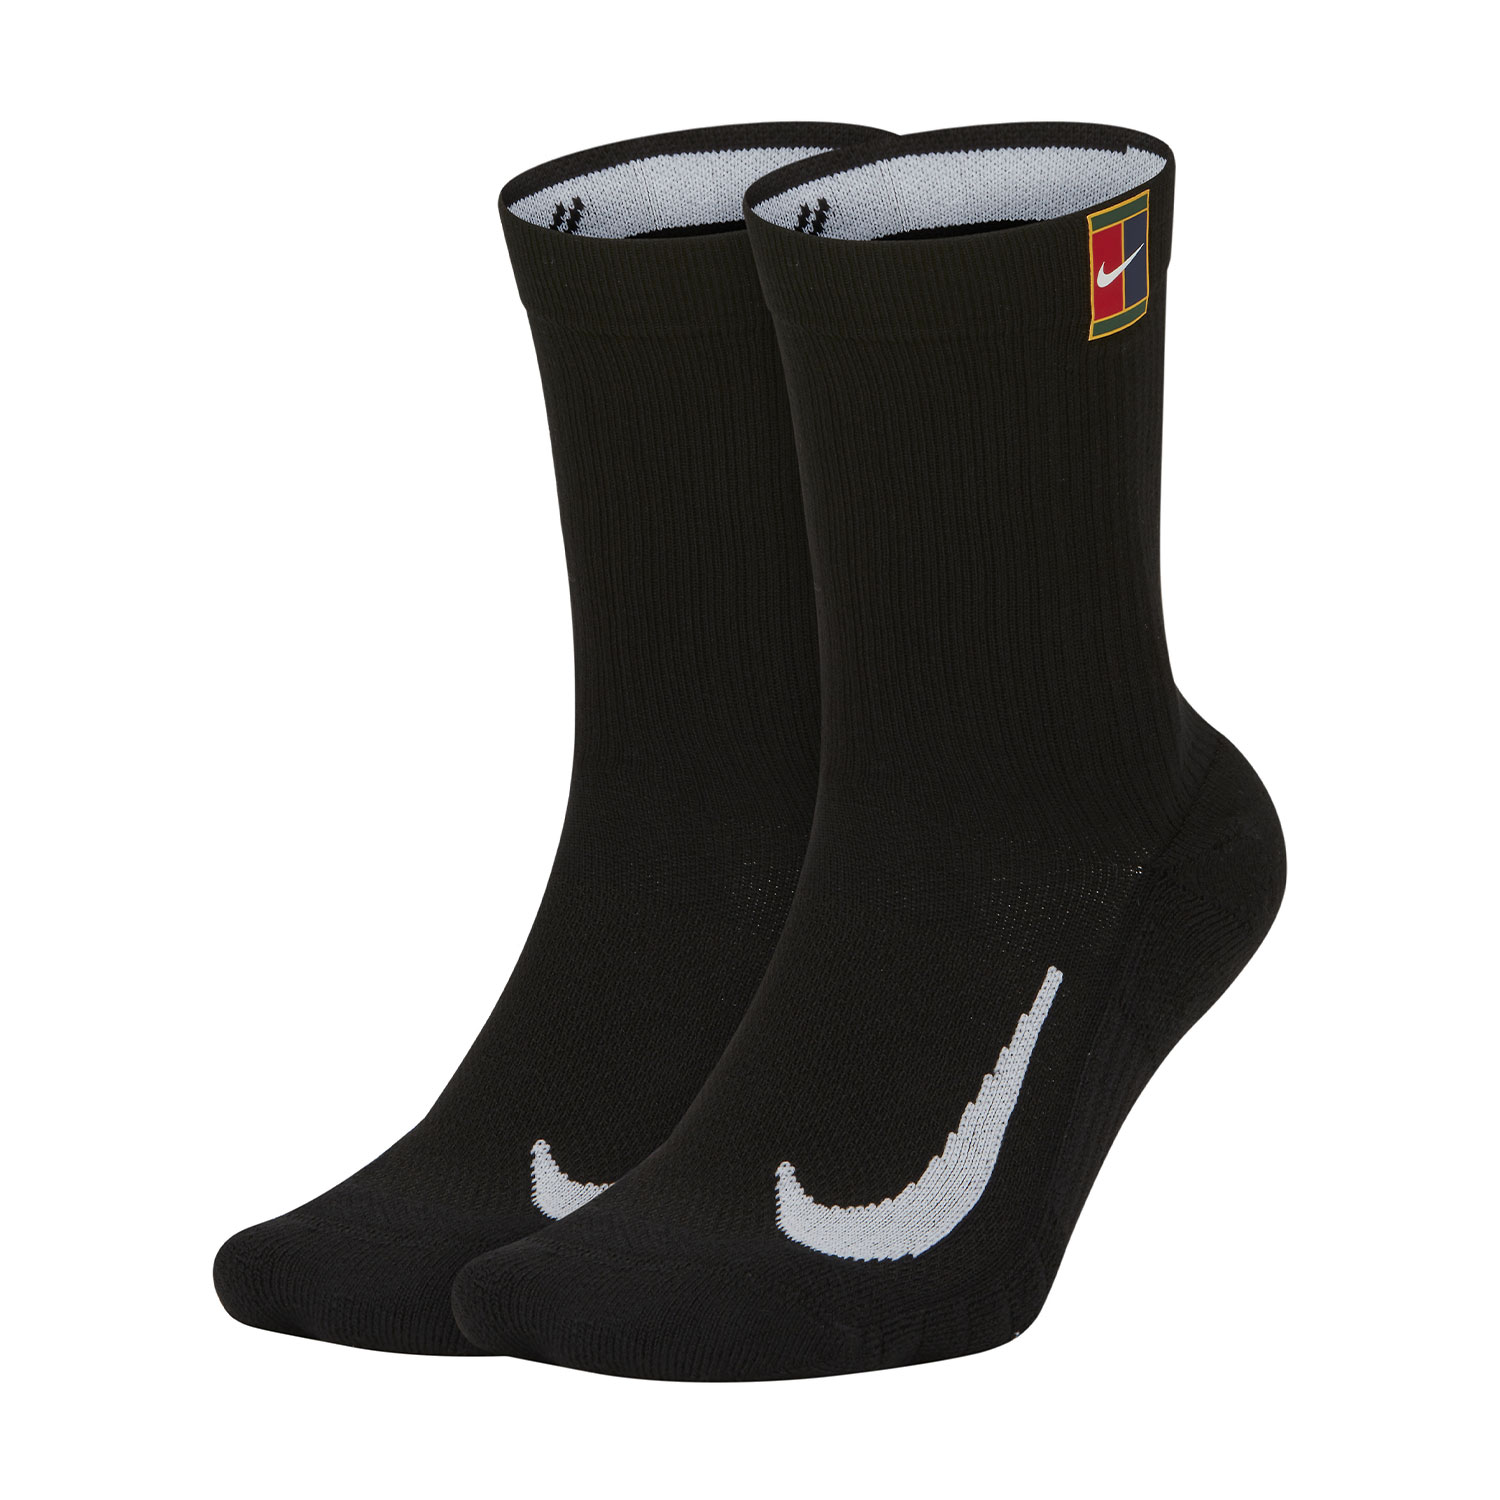 Nike Multiplier Cushioned x 2 Socks - Black